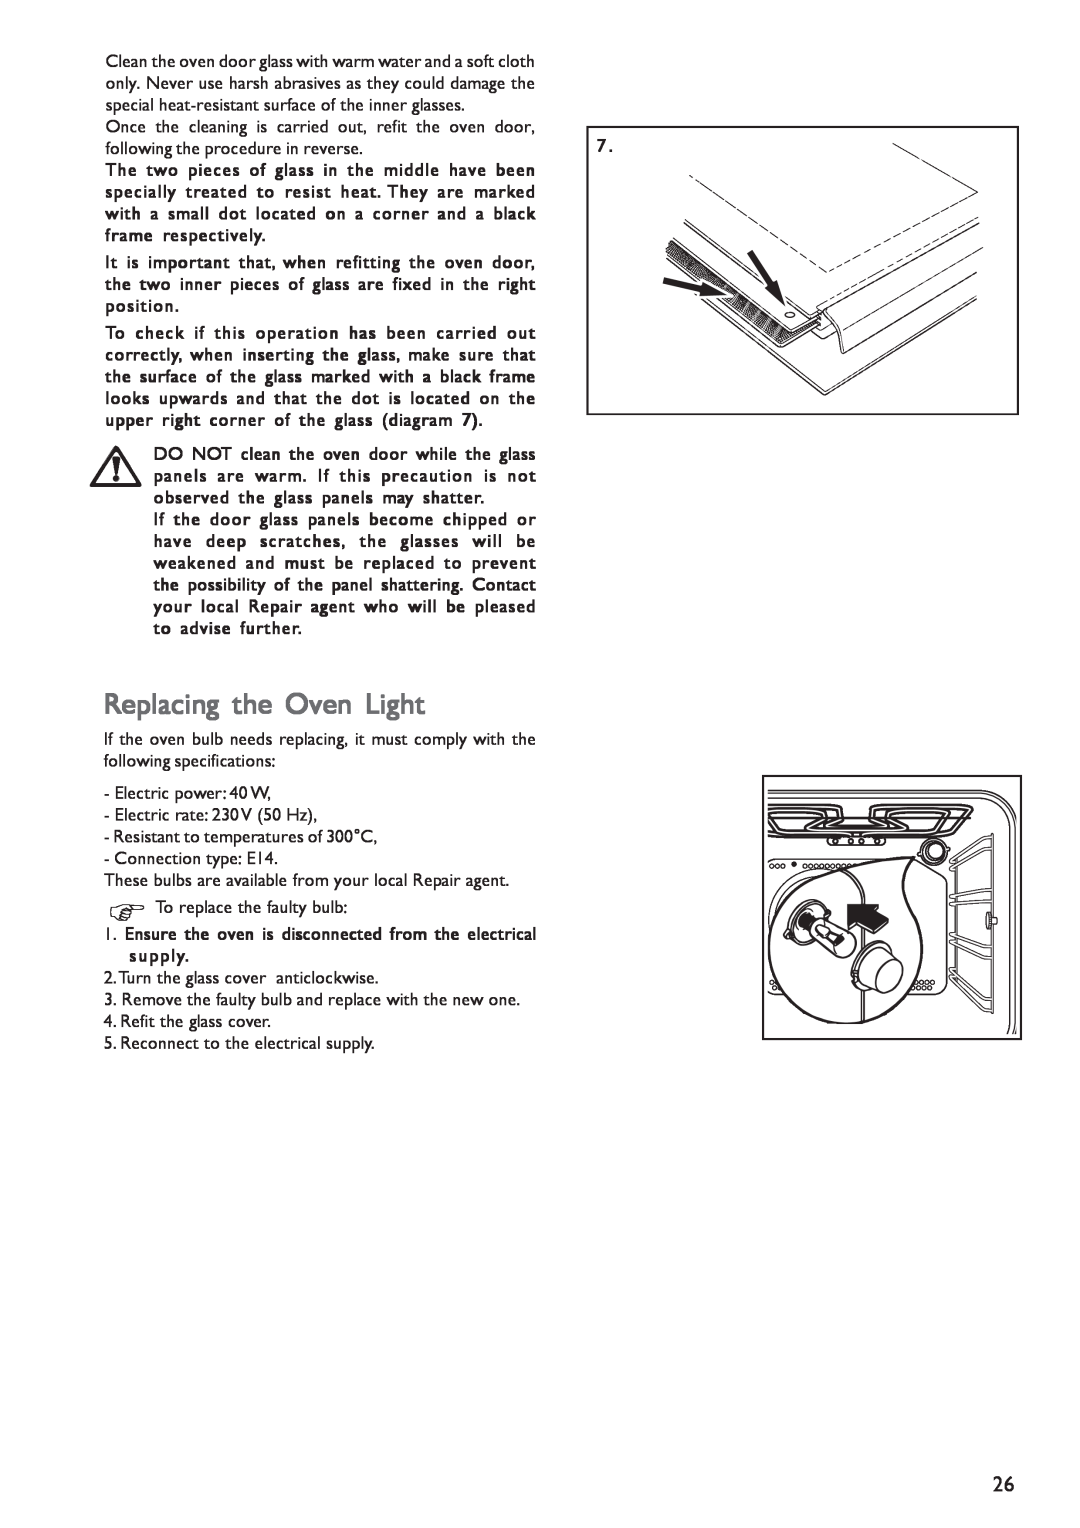 John Lewis JLBIOS603 instruction manual Replacing the Oven Light 